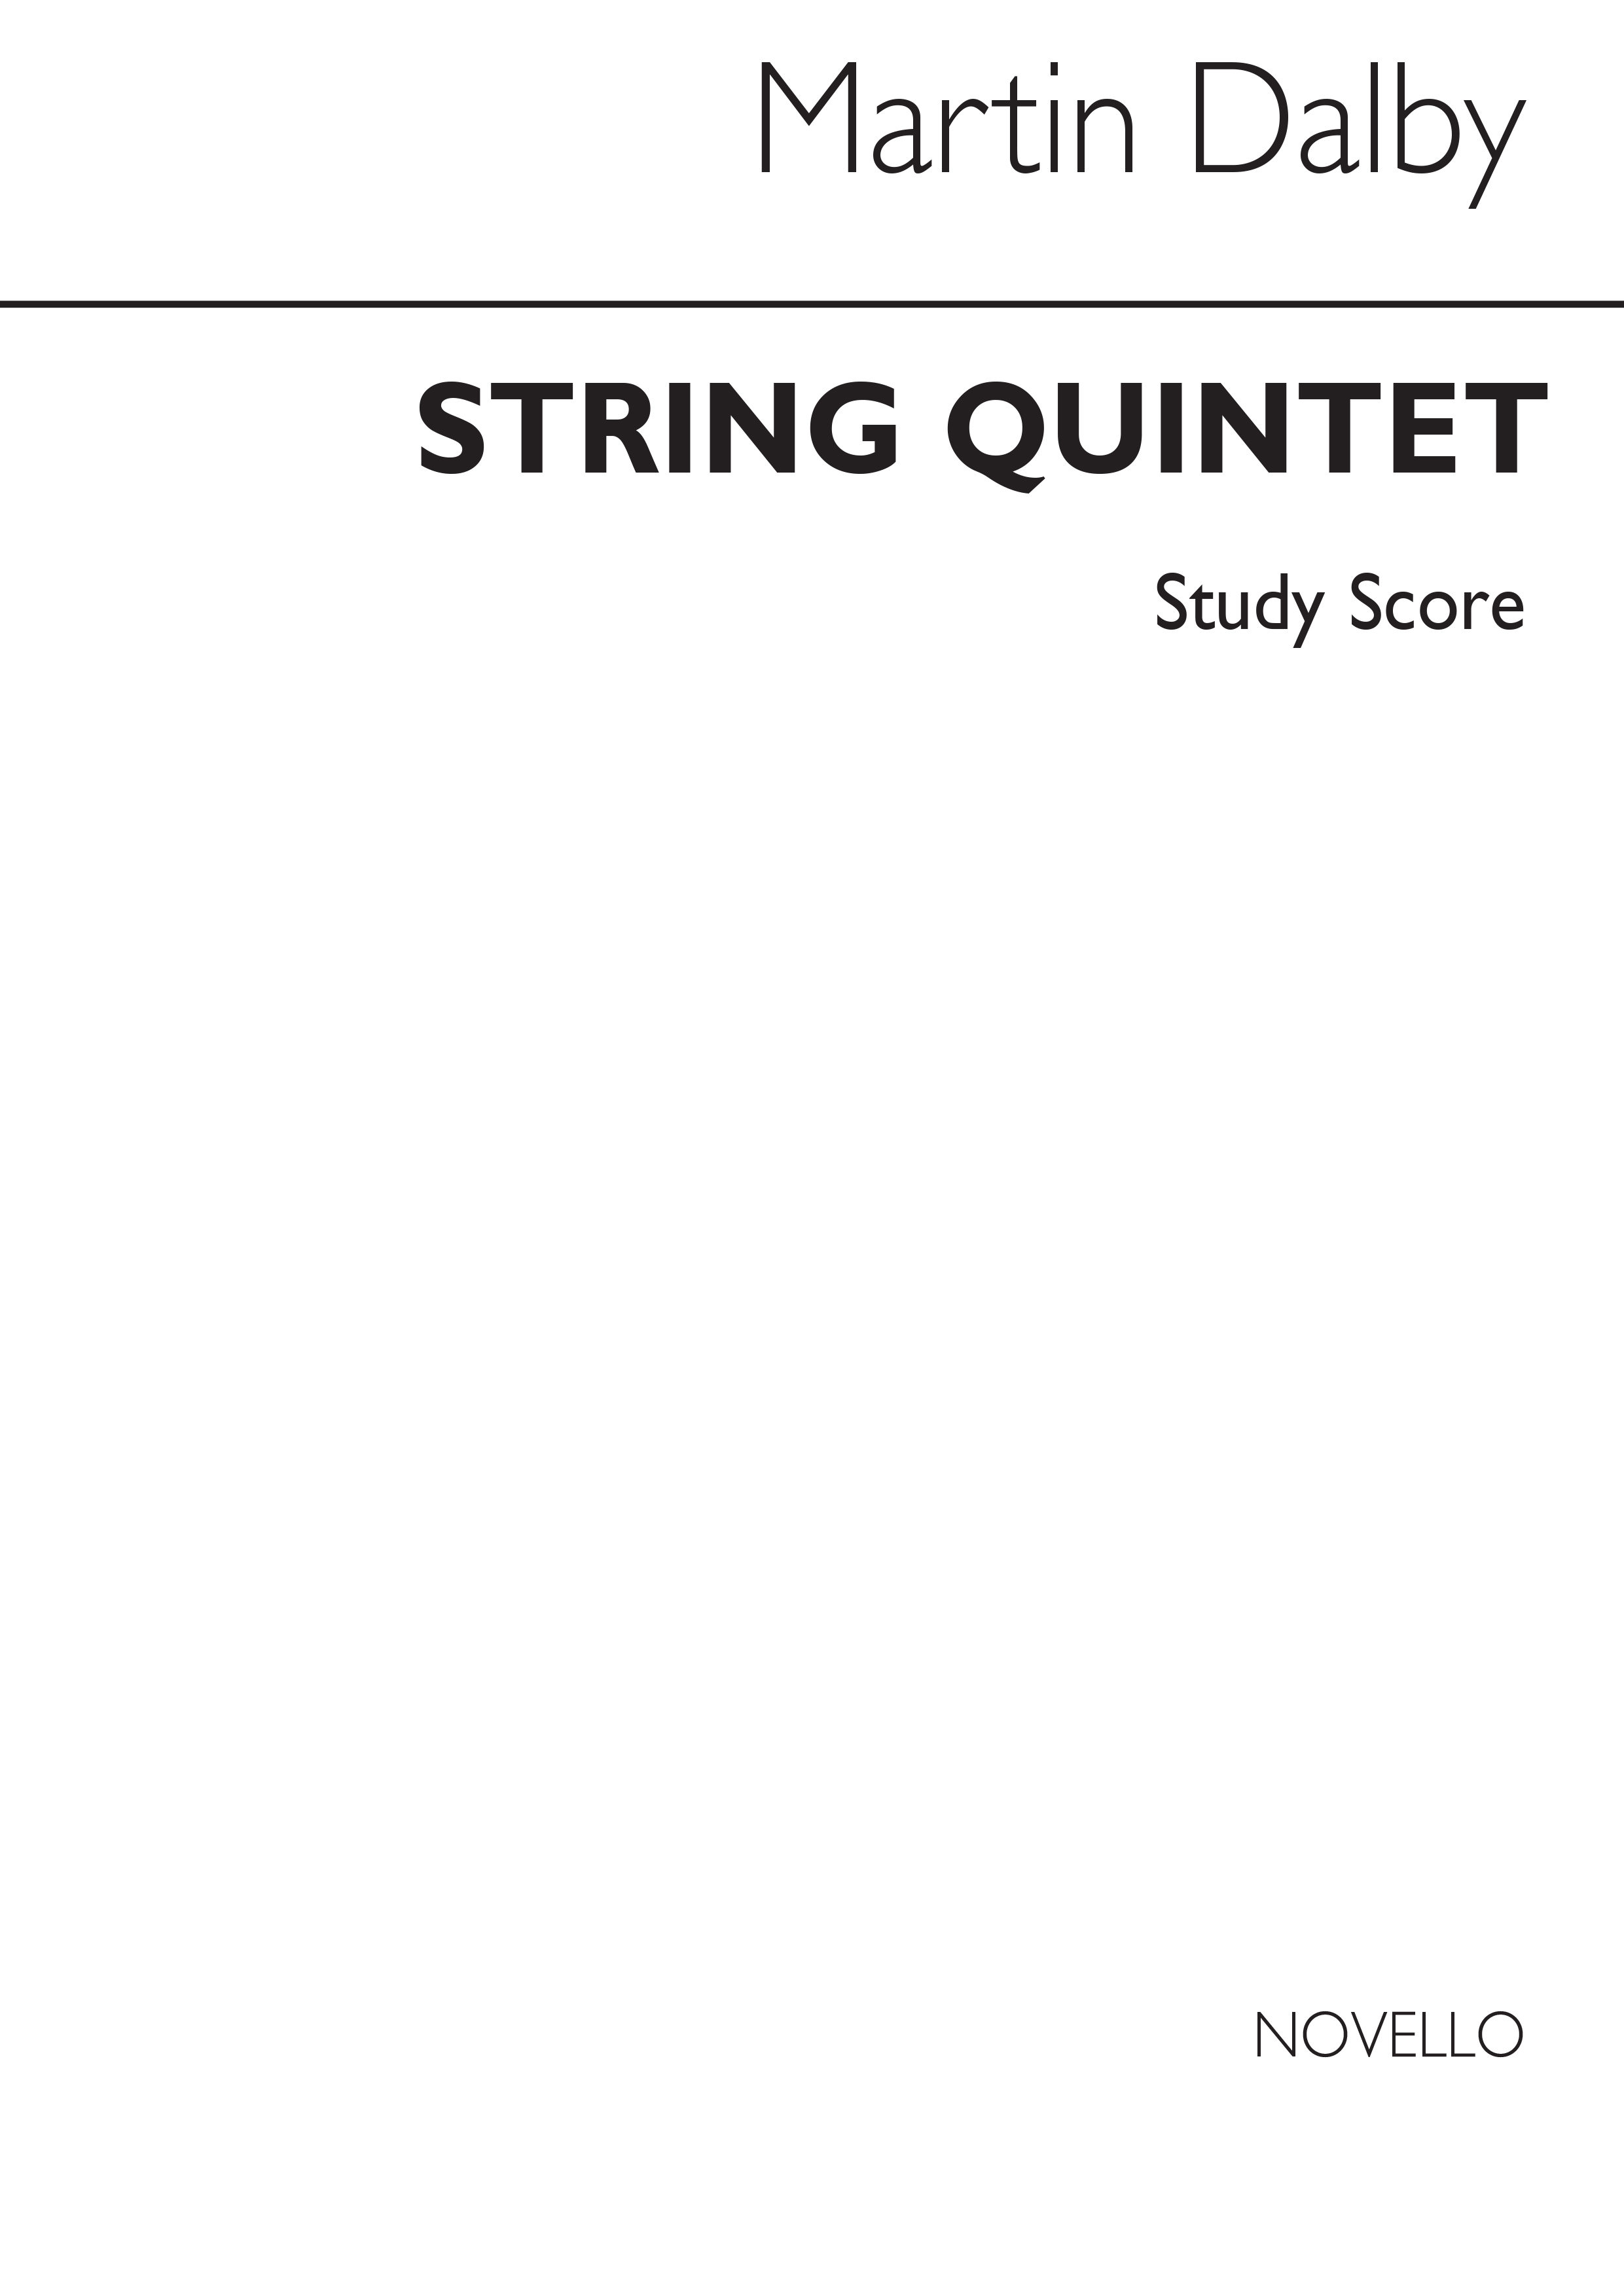 Dalby: String Quintet 1972 (Study Score)